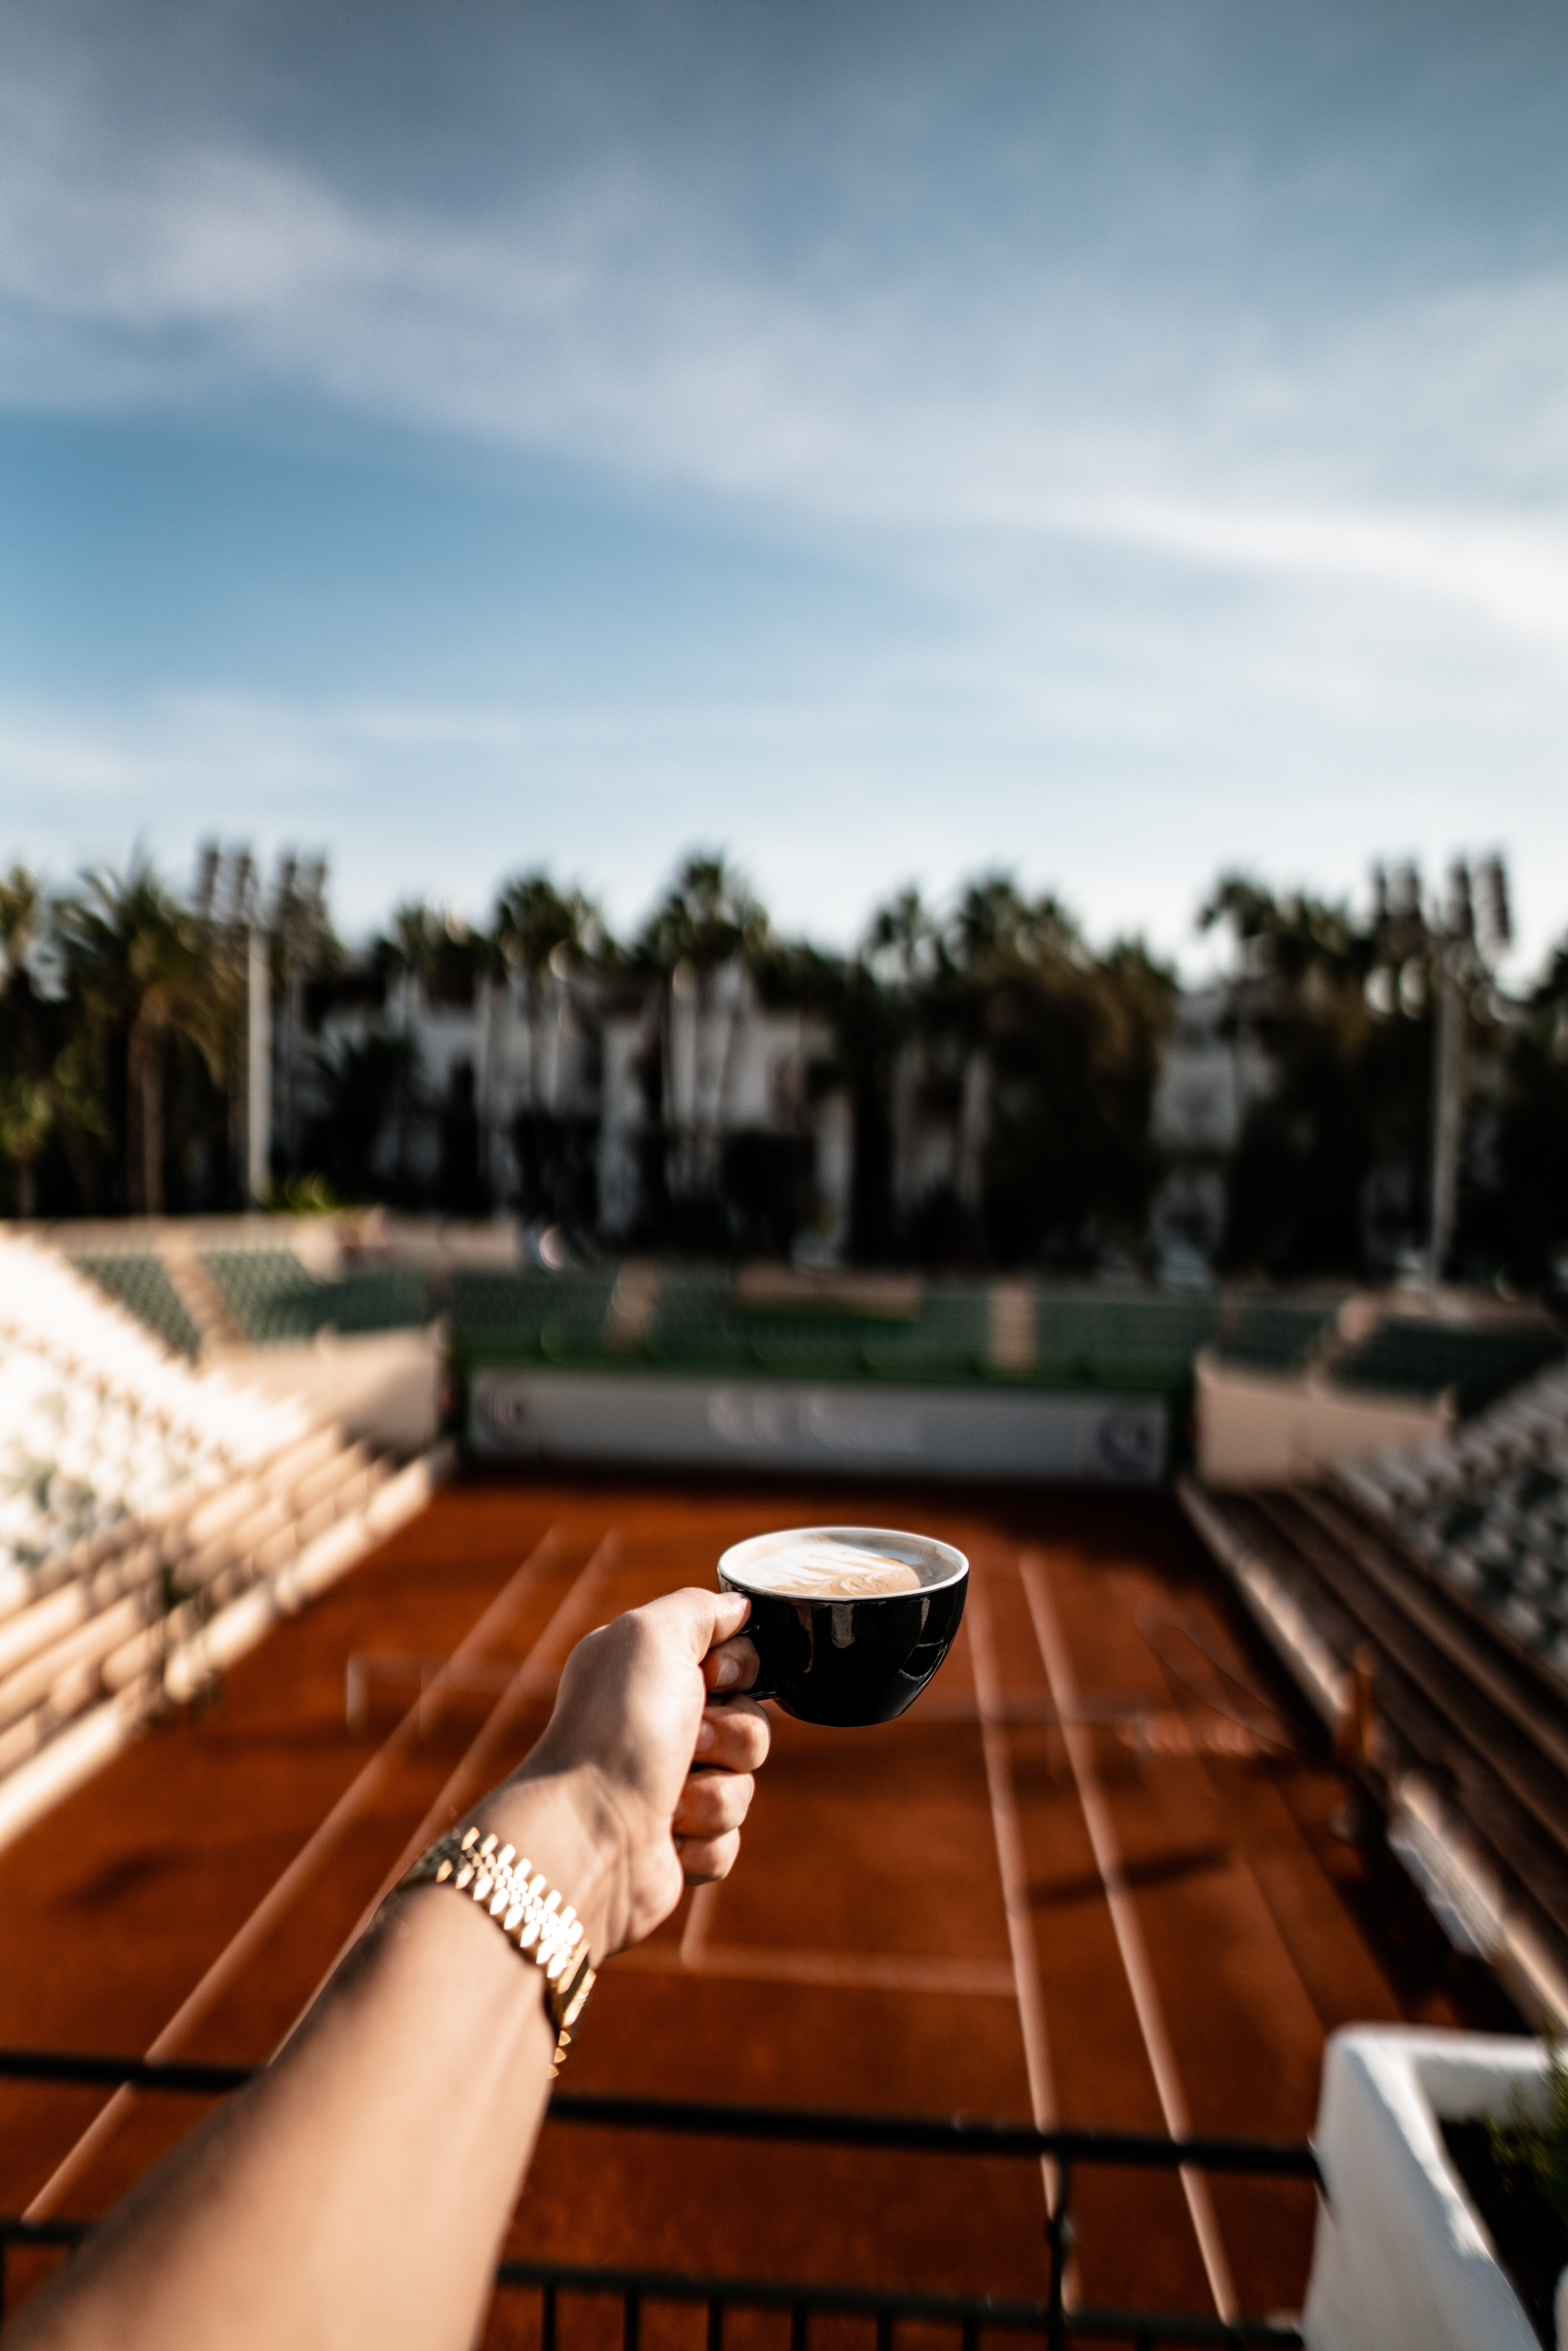 miscellanea, coffee, hand, miscellaneous, cup, tennis court FHD, 4K, UHD